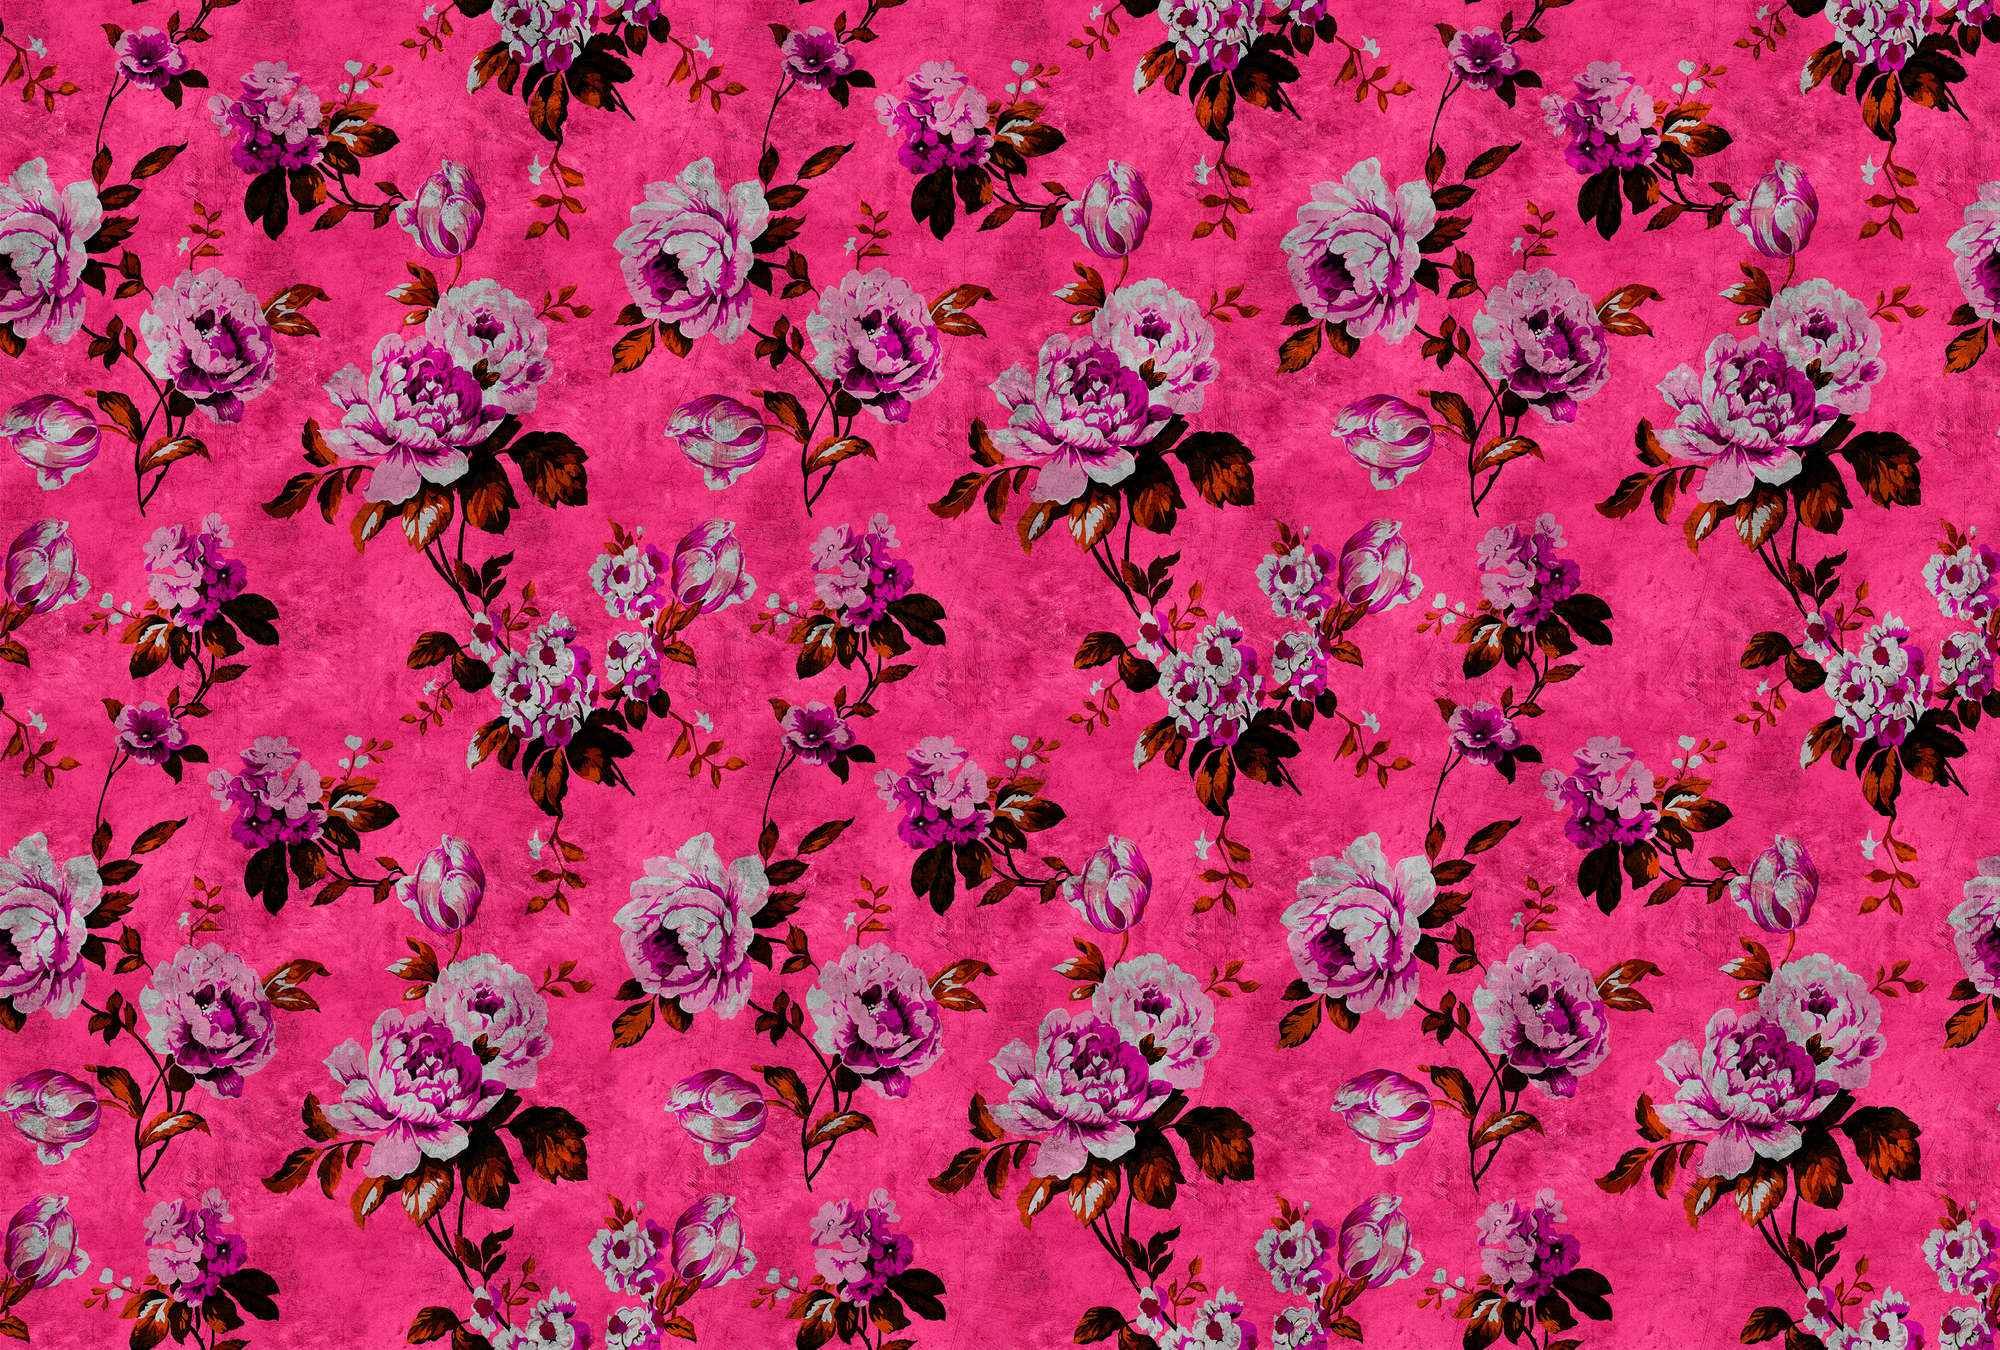             Wild roses 3 - Rosen Fototapete im Retrolook, Pink- Kratzer Struktur – Rosa, Rot | Perlmutt Glattvlies
        